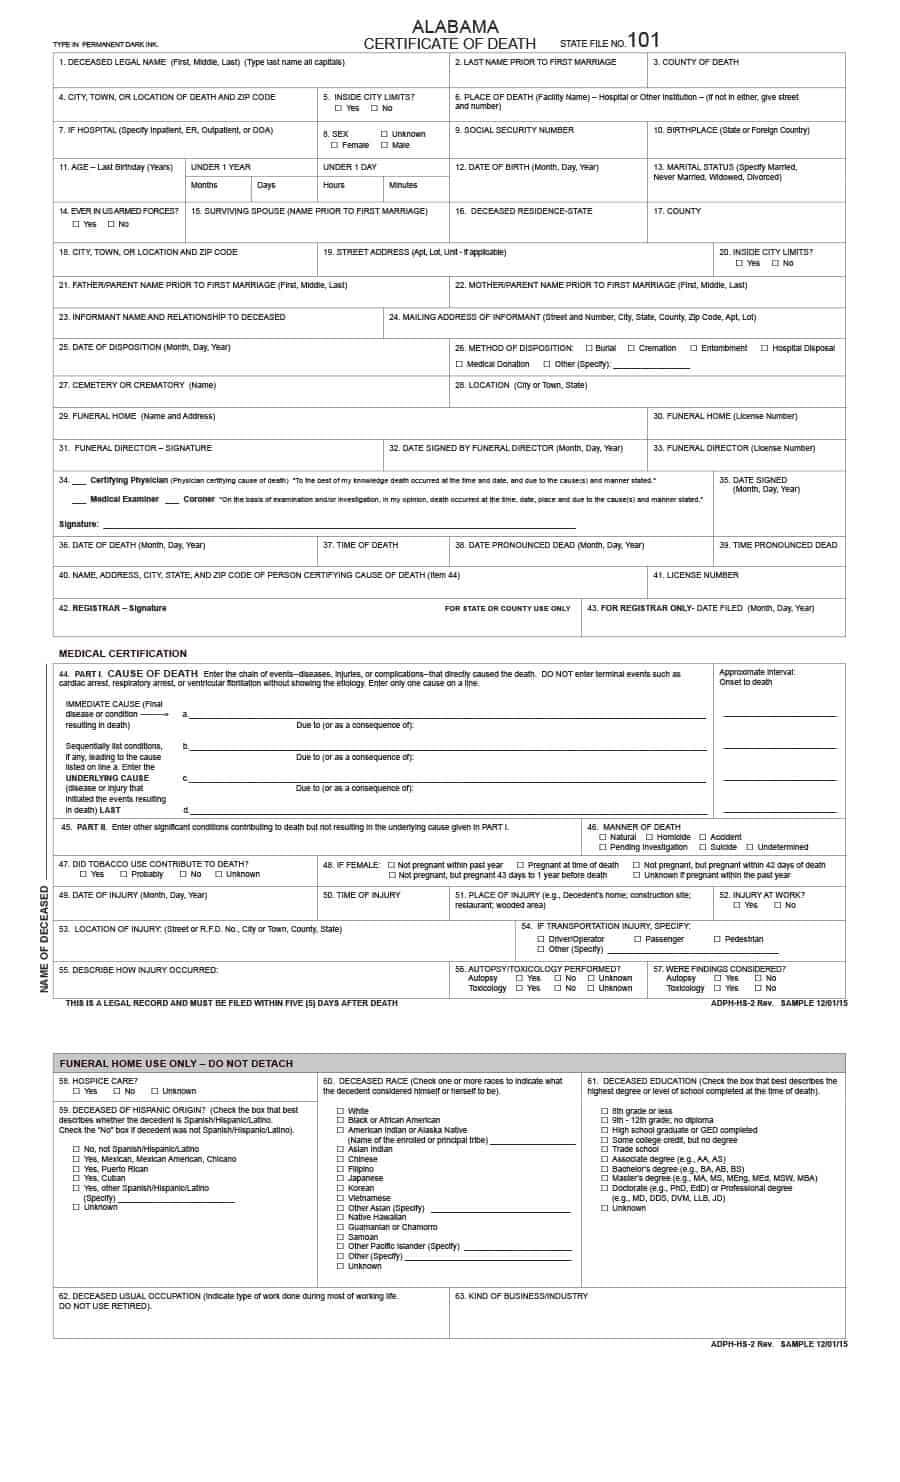 37 Blank Death Certificate Templates [100% Free] ᐅ Templatelab Inside Birth Certificate Fake Template